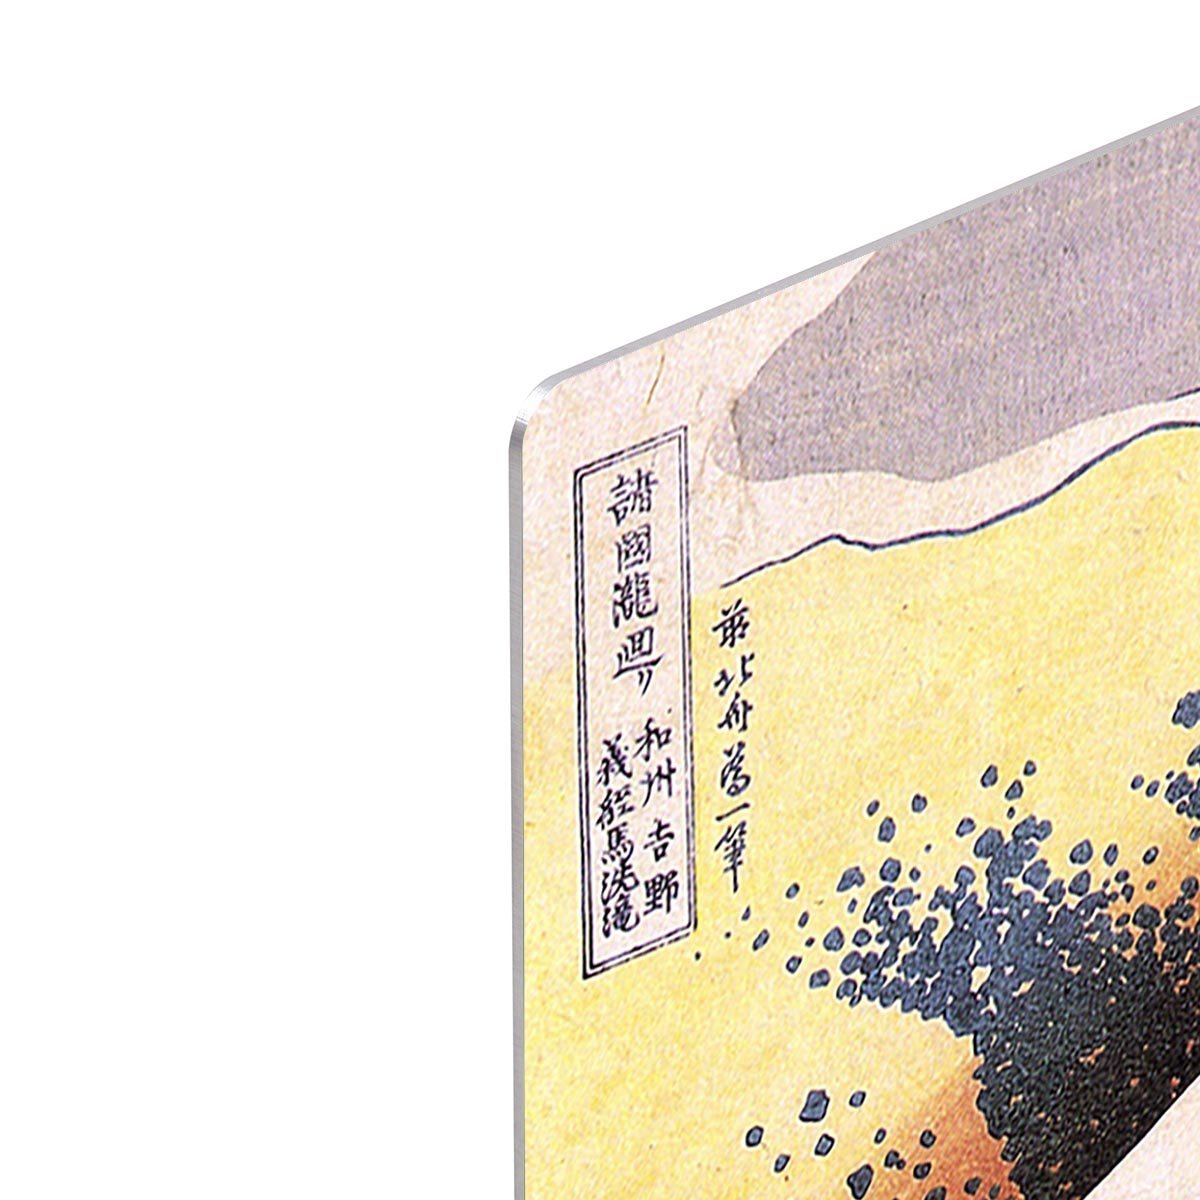 Waterfall and horse washing by Hokusai HD Metal Print